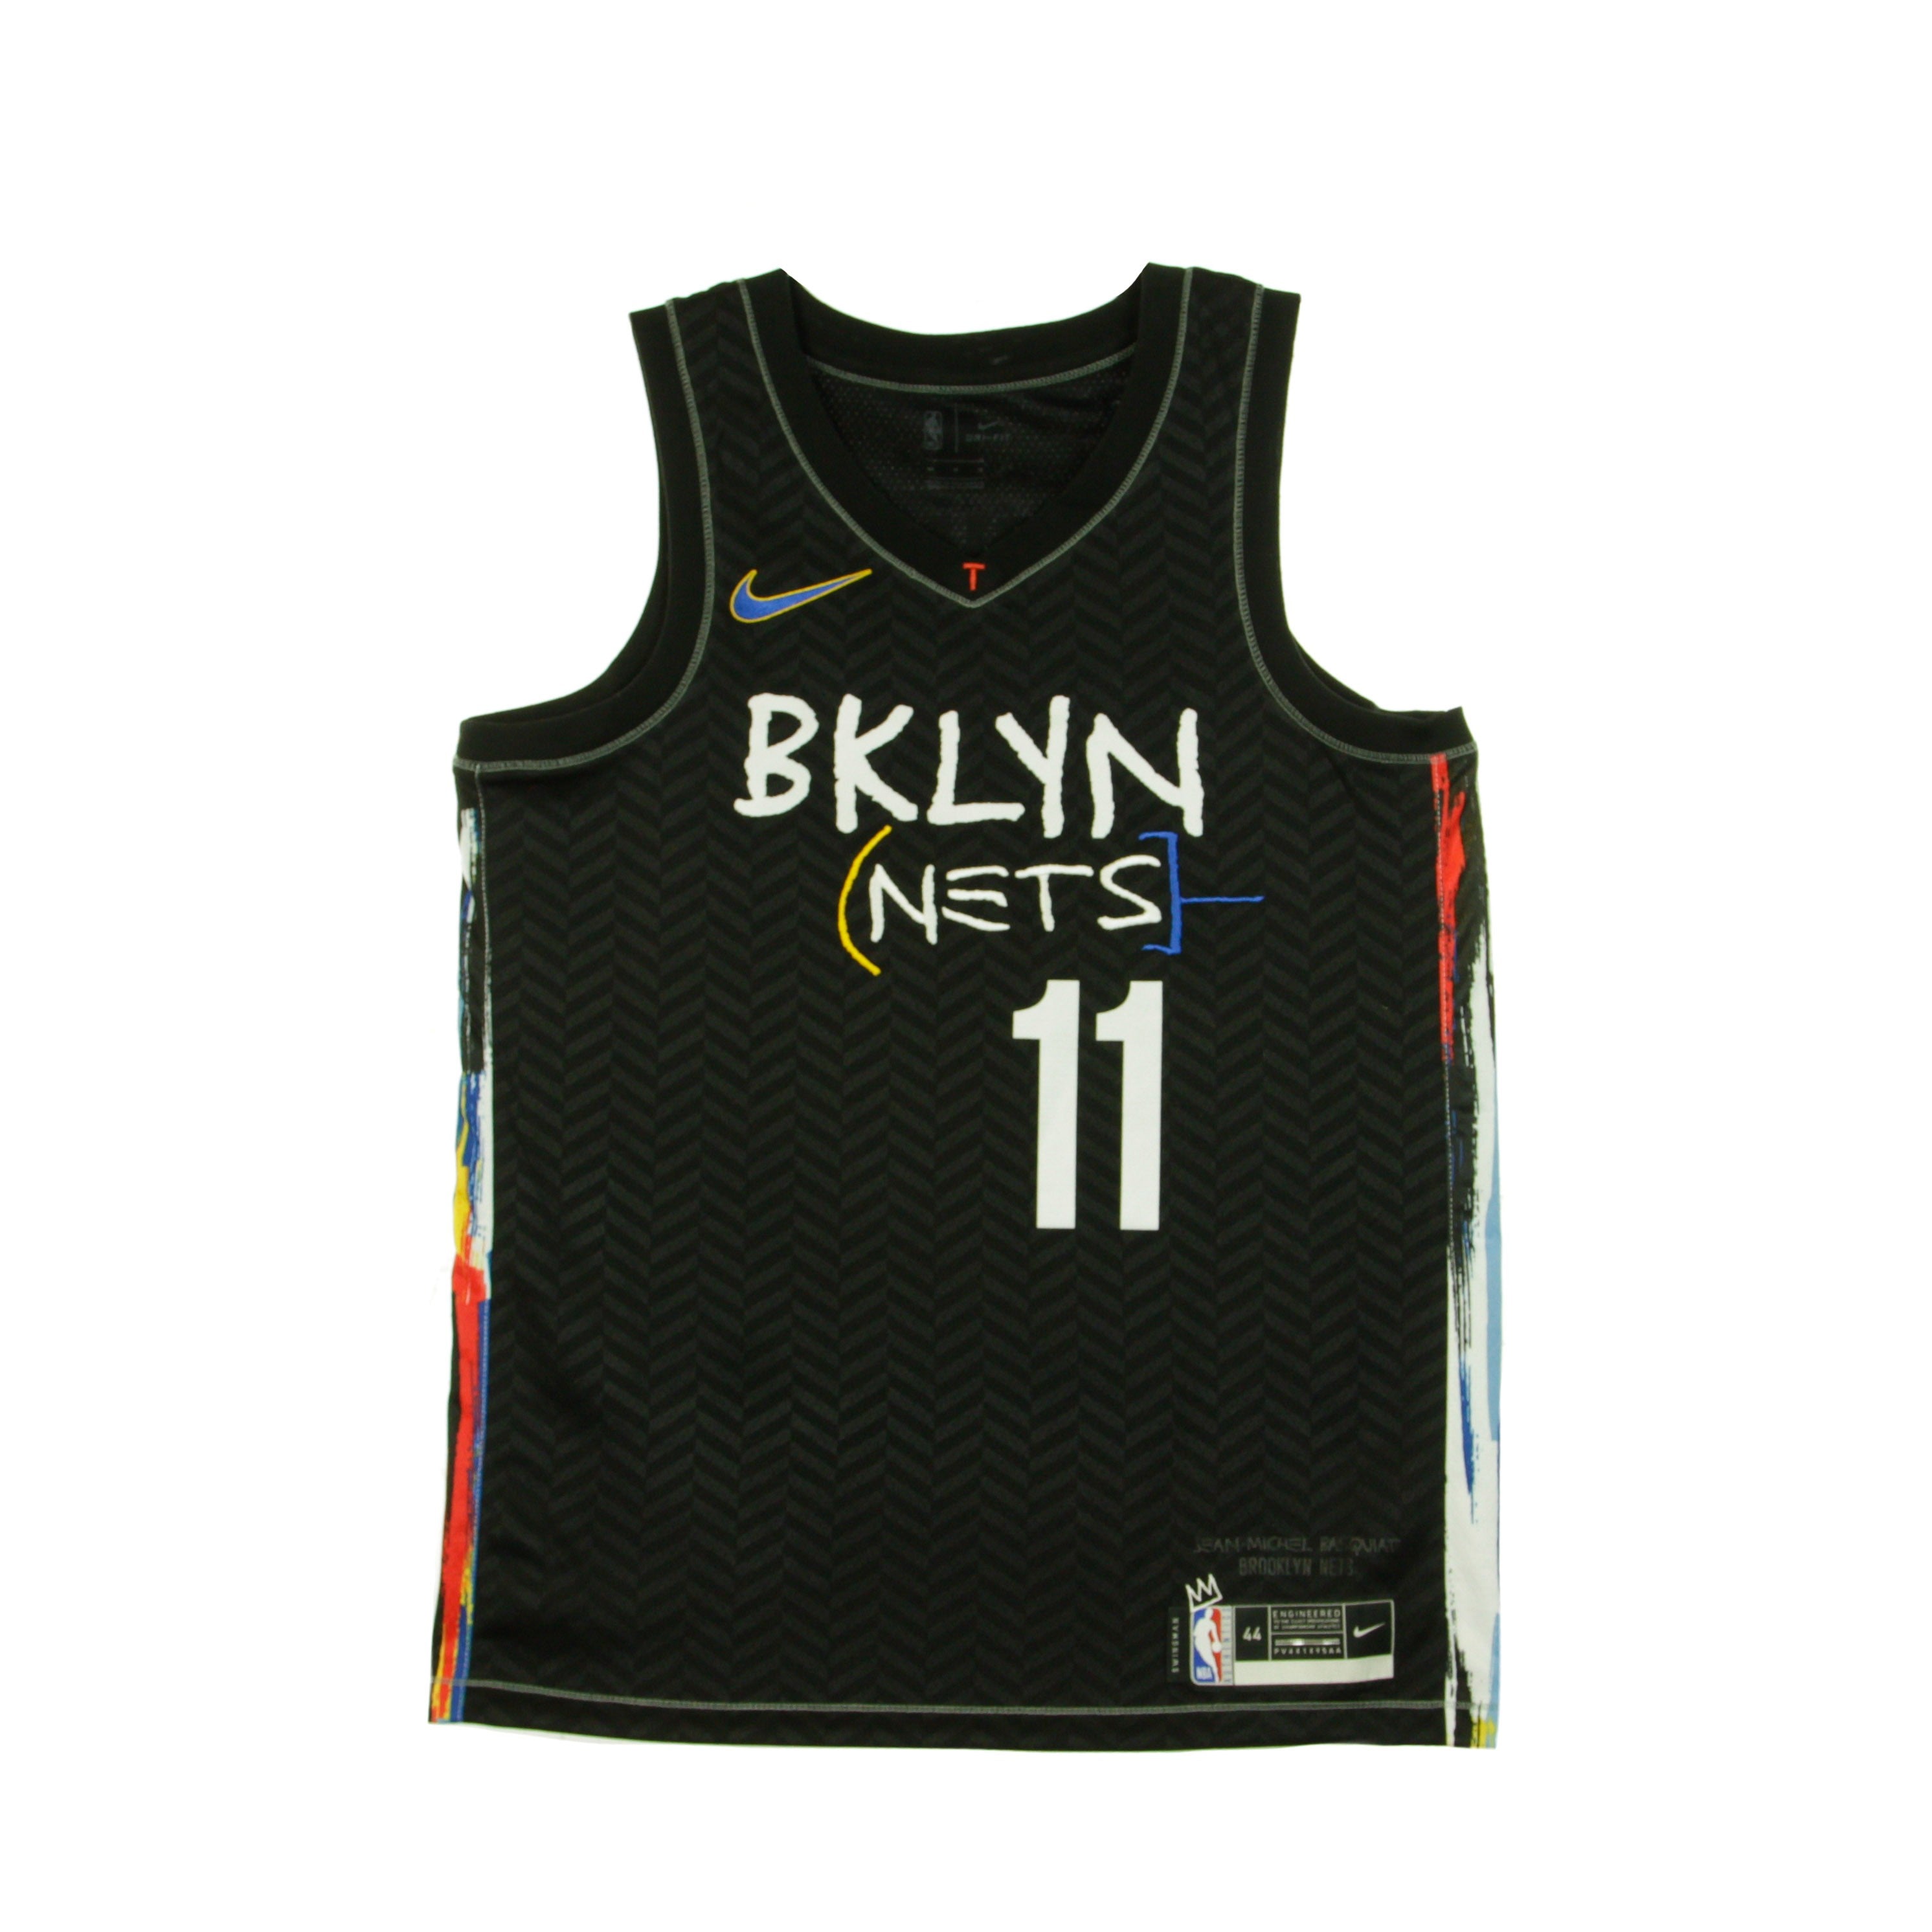 Men's Basketball Tank Top Nba Swingman Jersey City Edition 2020 No 11 Kyrie Irving Bronet